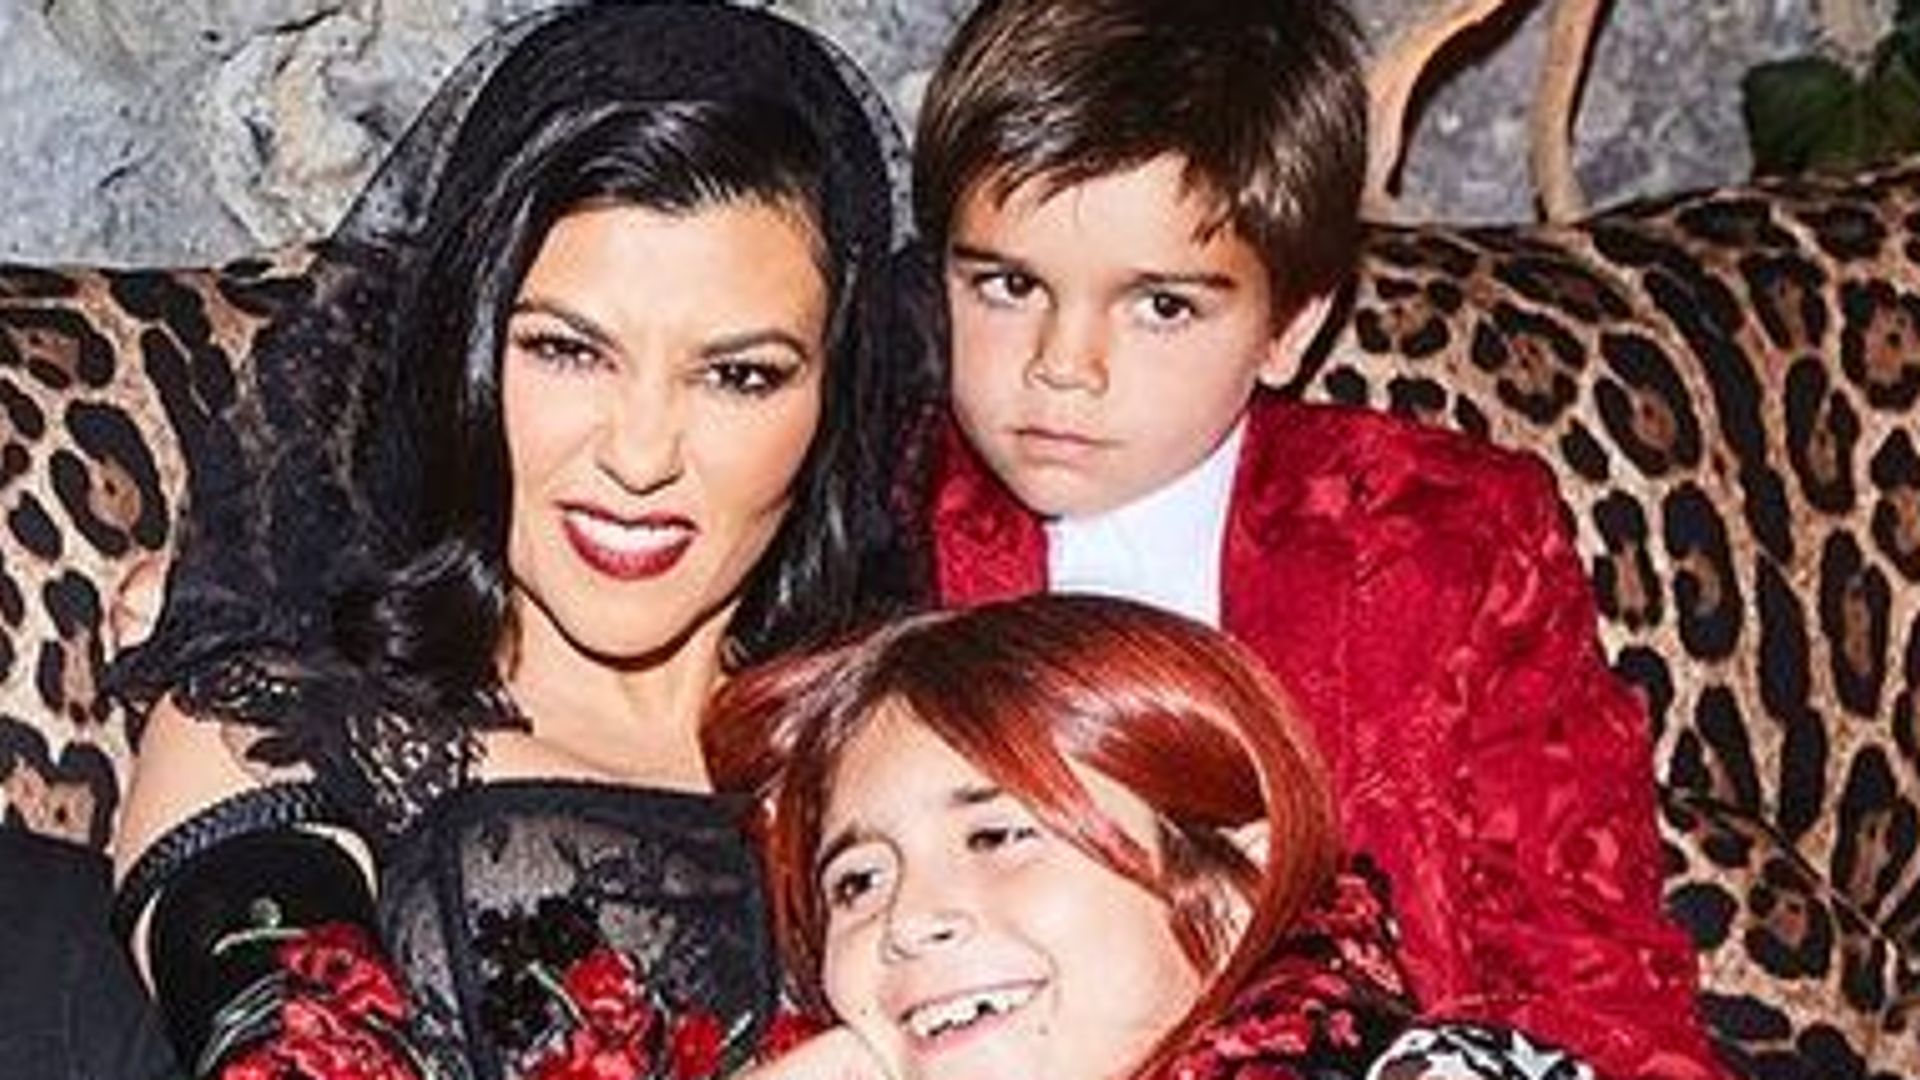 Kourtney Kardashian with son Reign and daughter Penelope Halloween